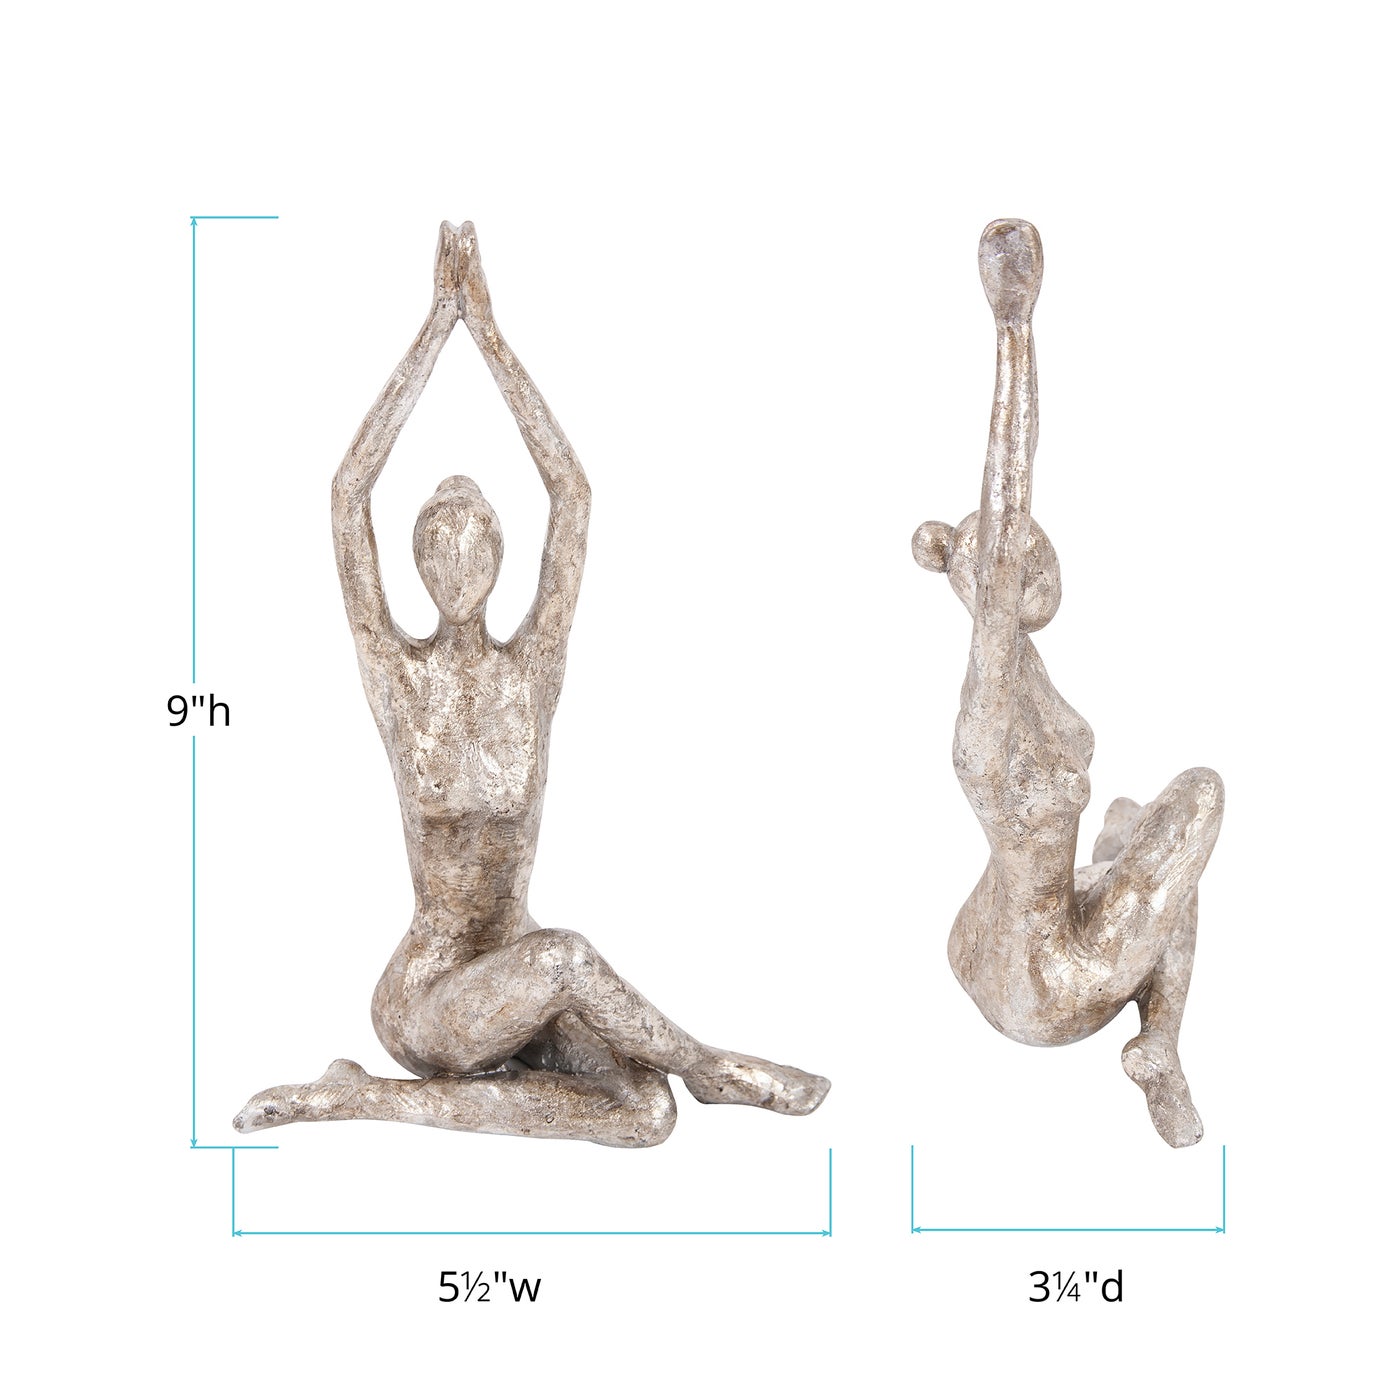 yoga seated twist pose